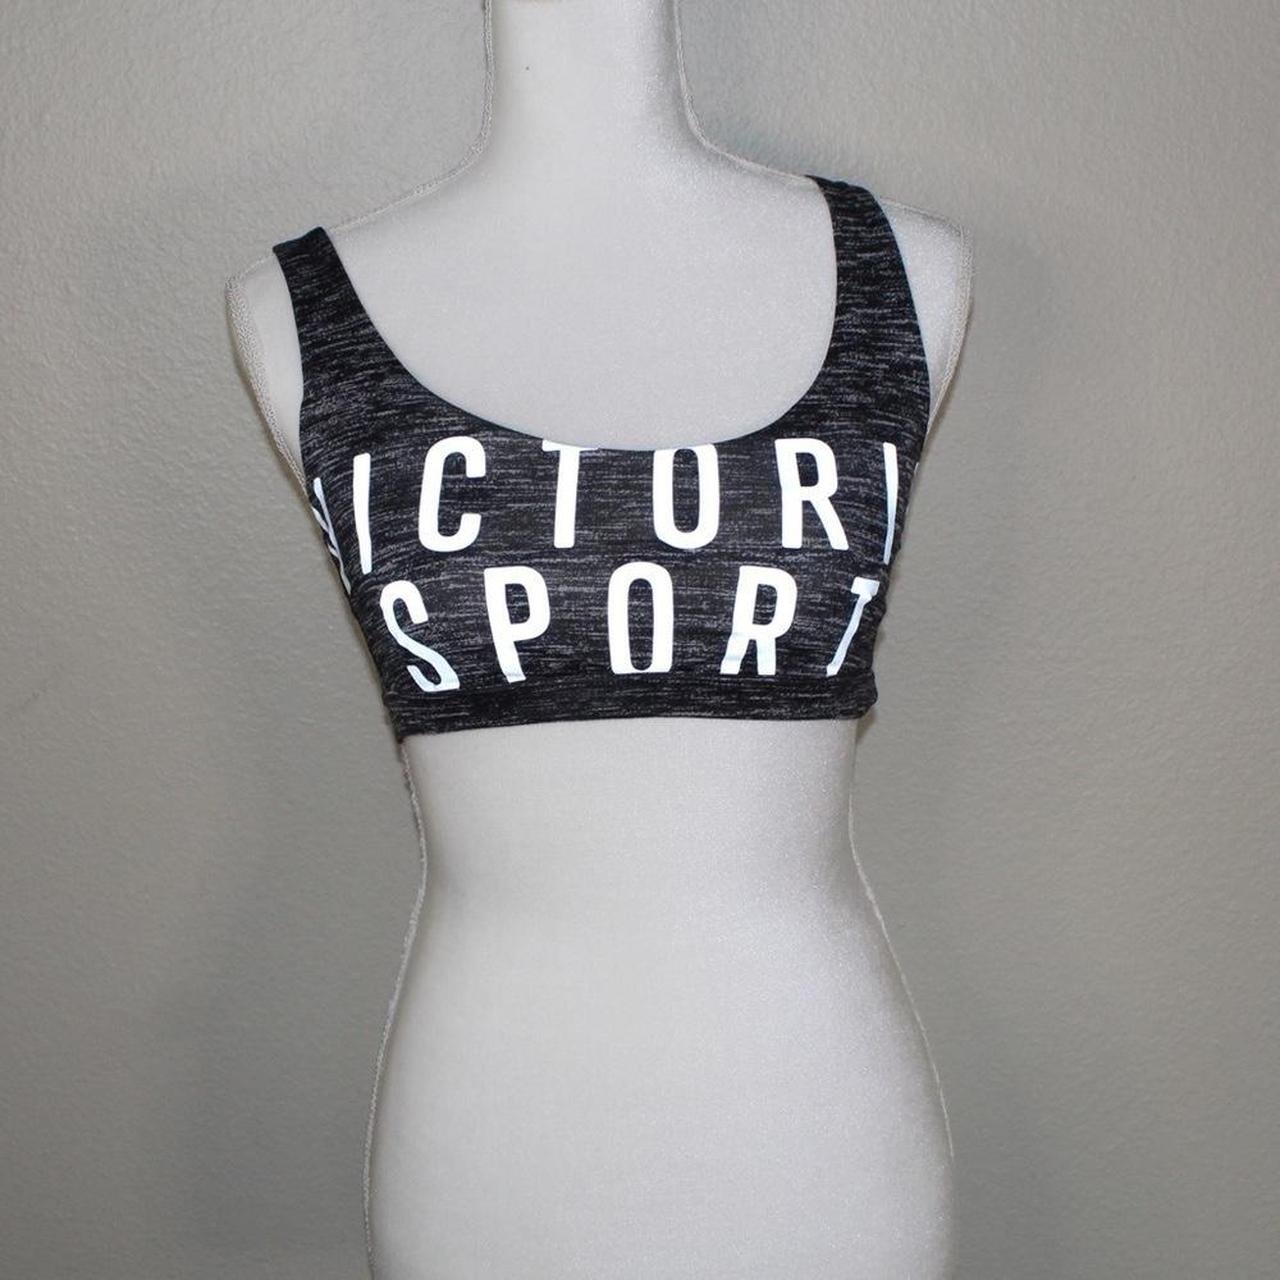 Victoria secret sport white sports bra with silver - Depop